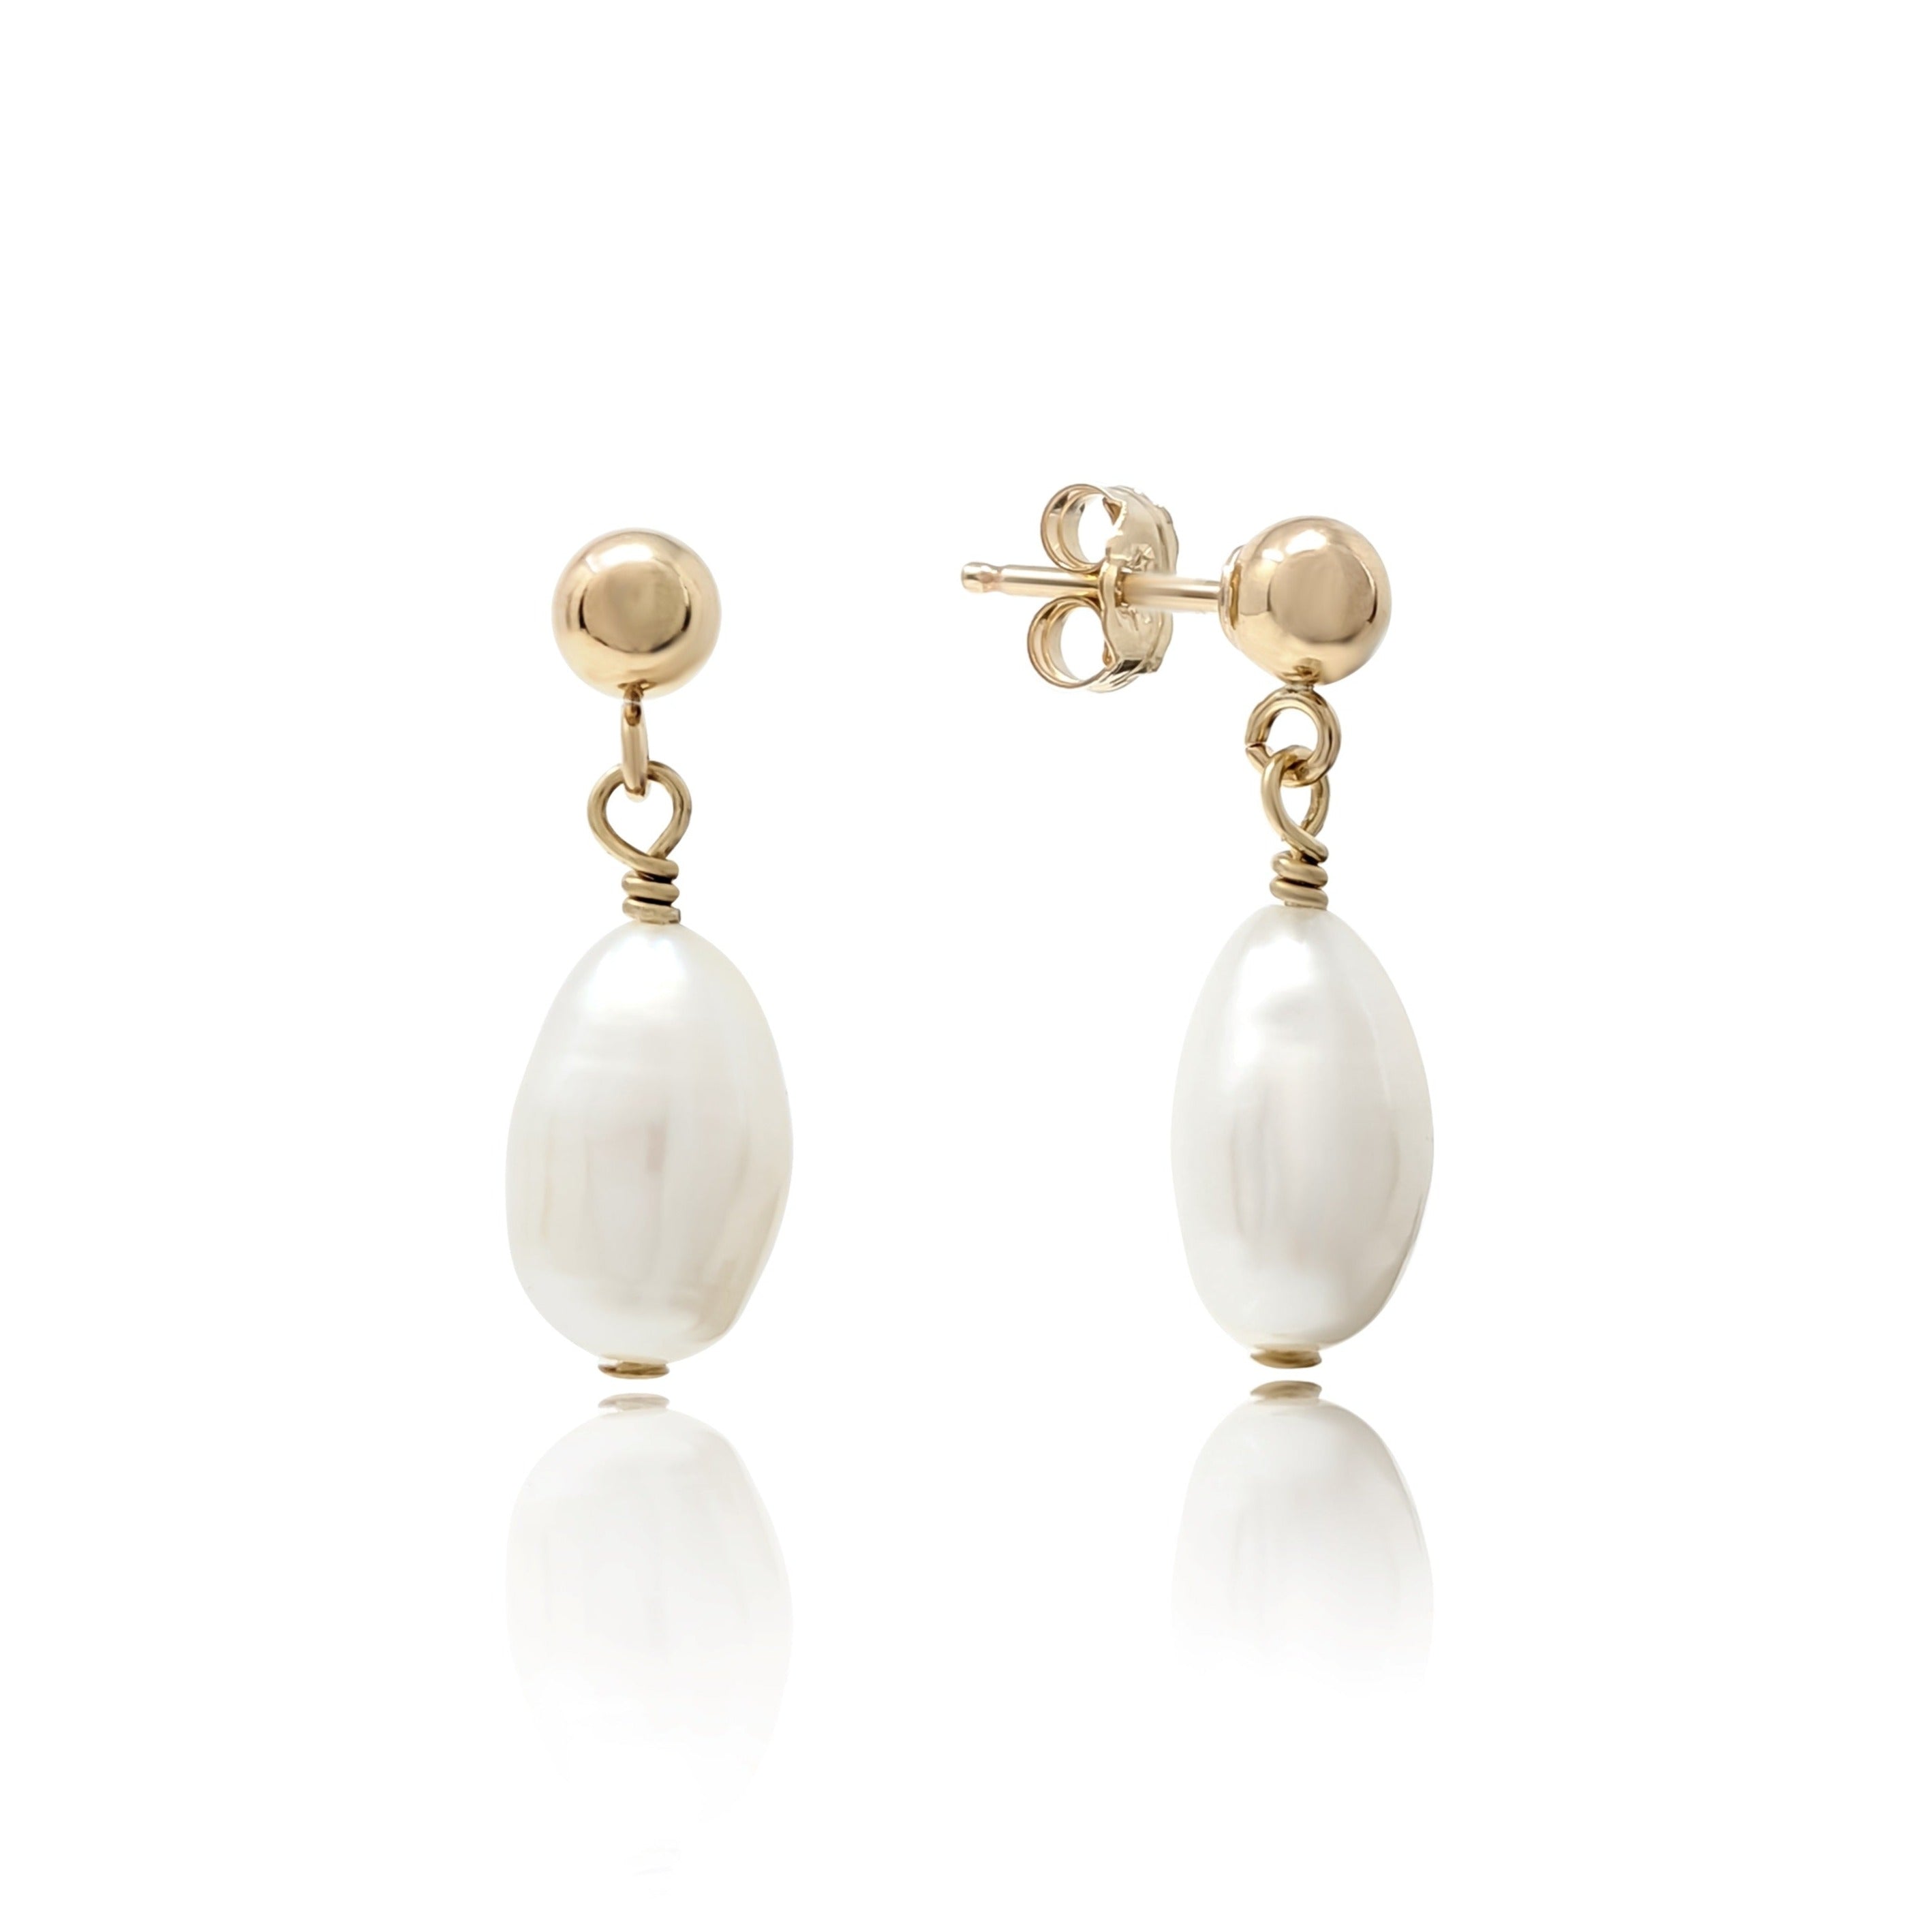 Gold filled ball stud pearl drop earrings